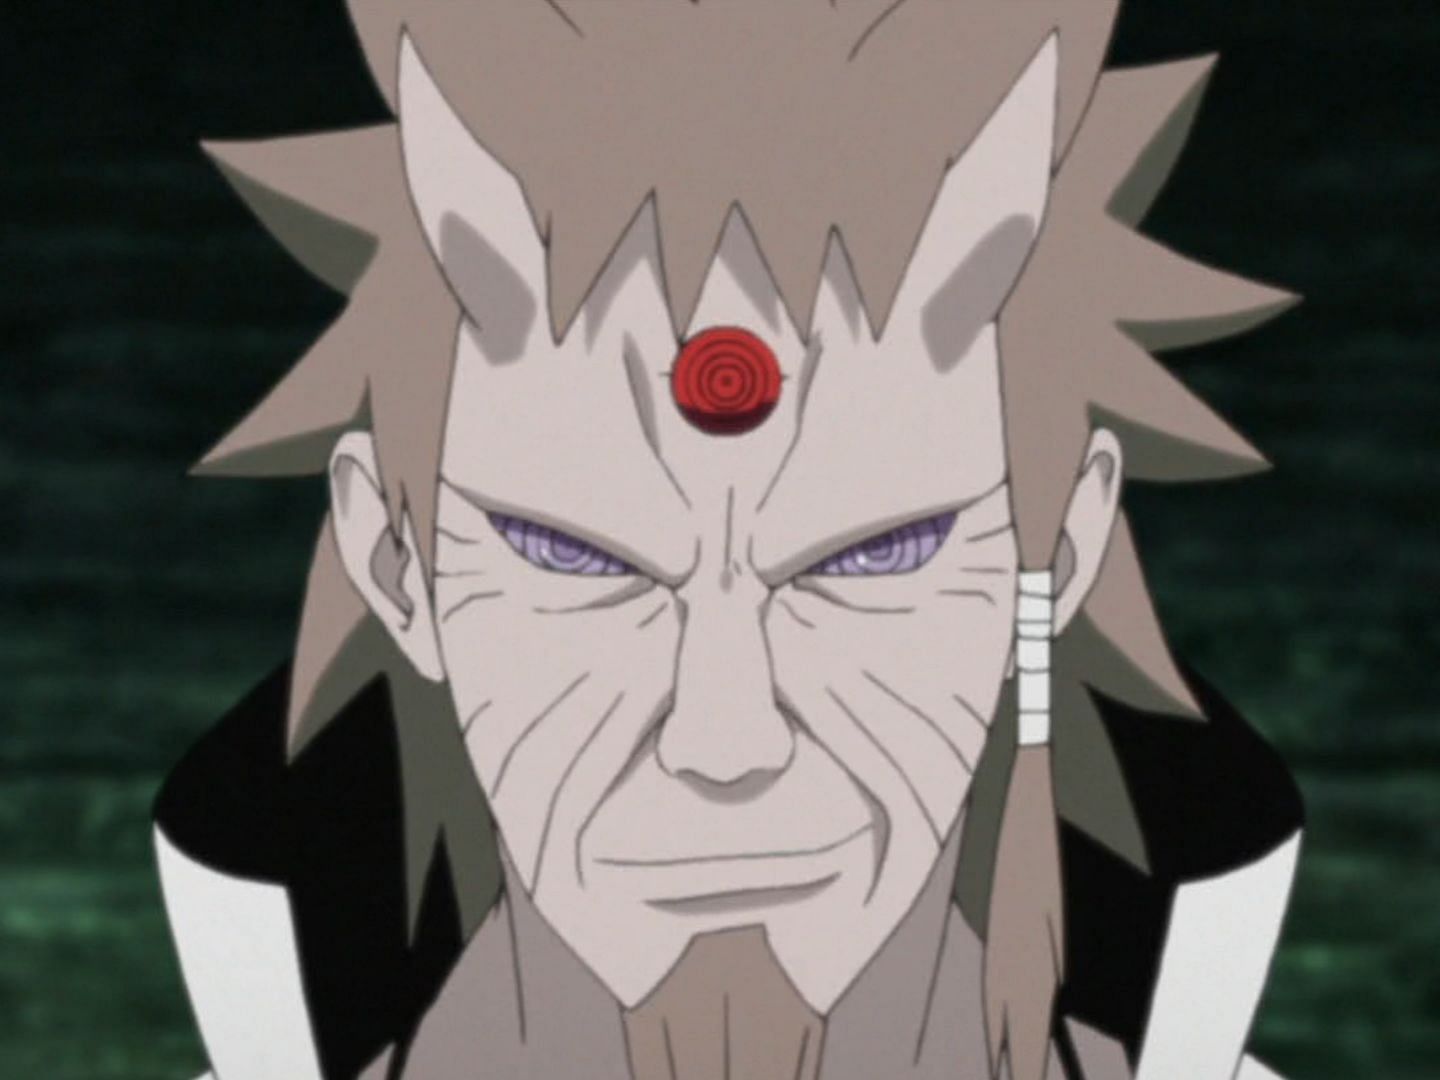 Hagoromo from the Naruto series (Image via Pierrot)